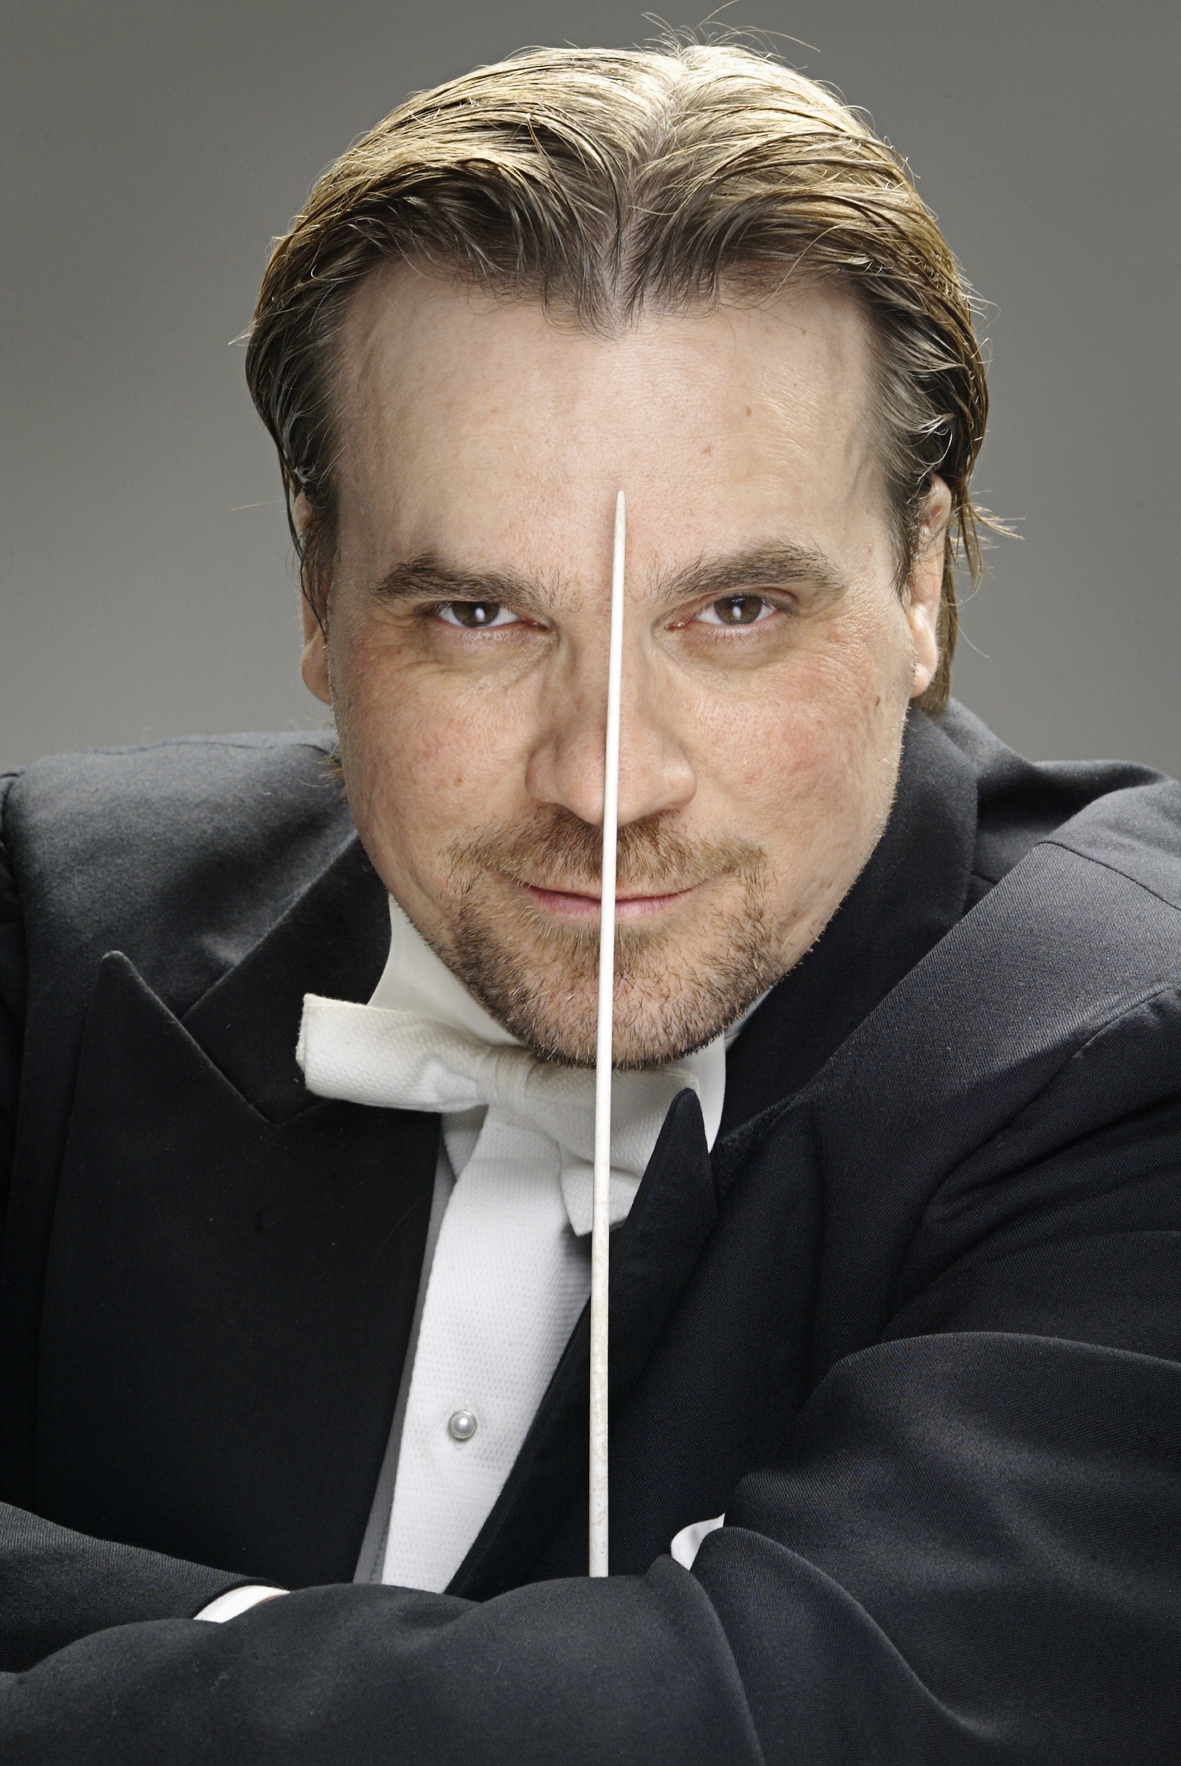 John Storgårds, conductor